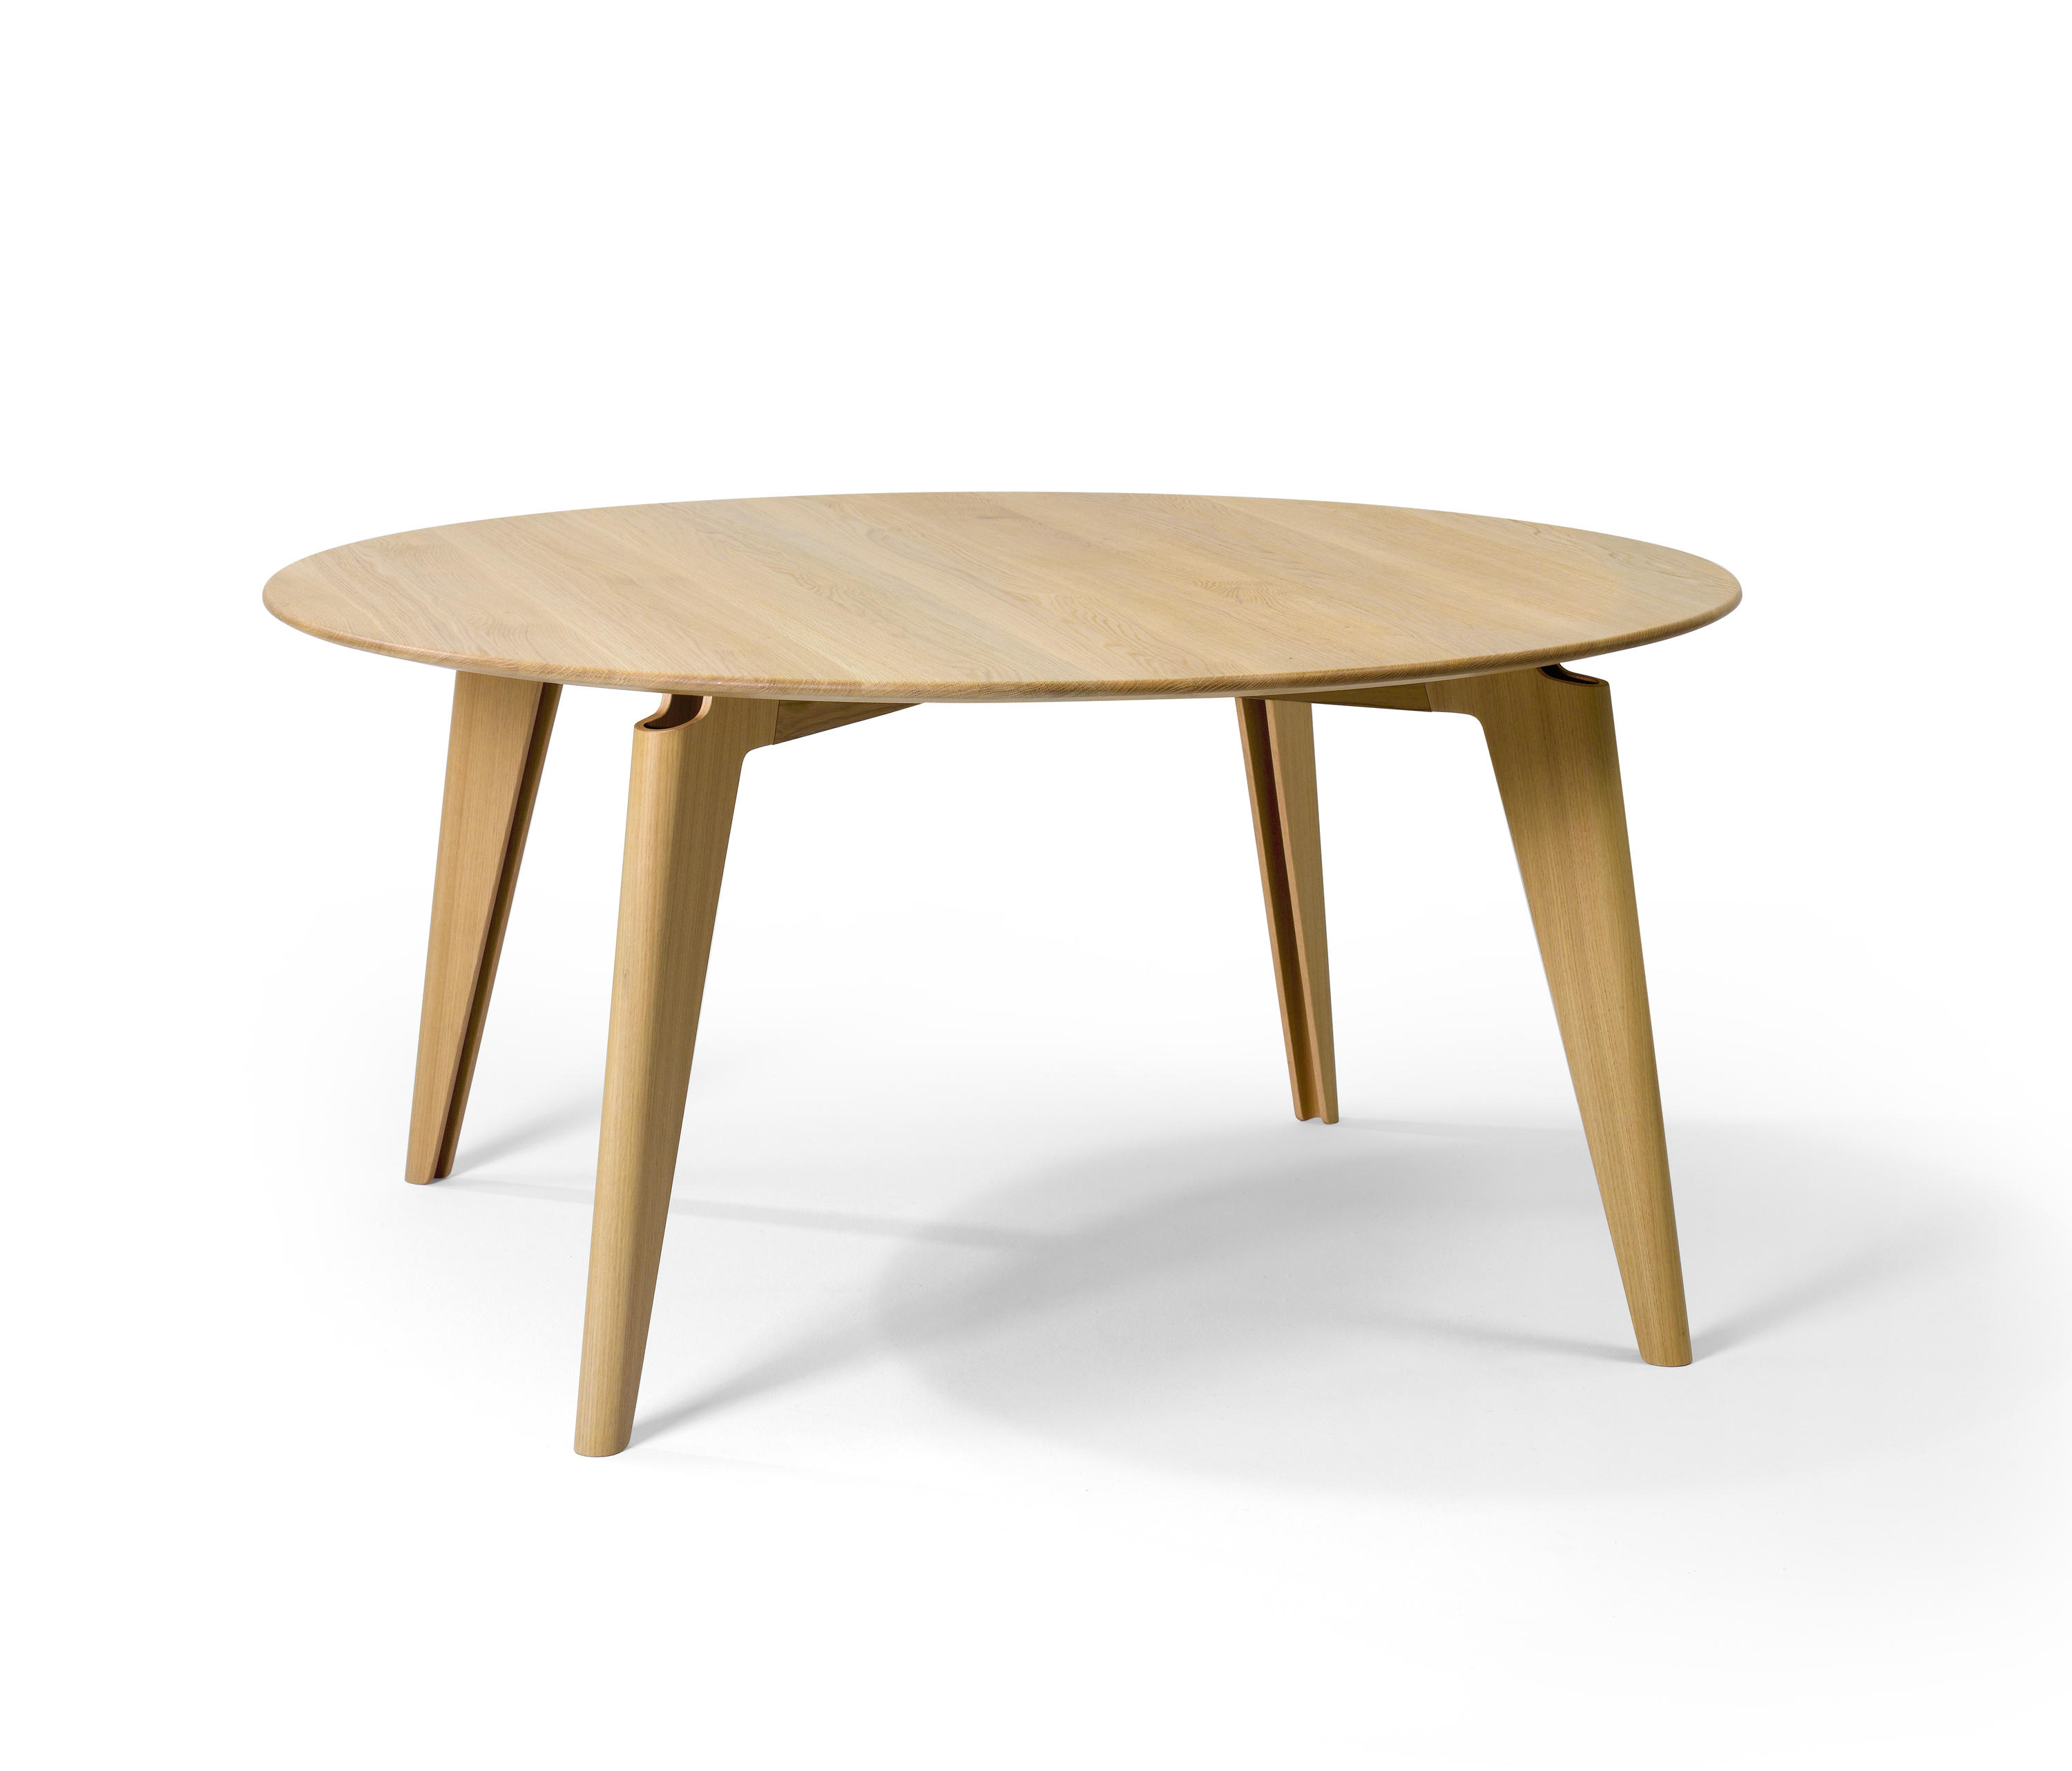 TAKUSHI TABLE - Dining tables from Röthlisberger Kollektion | Architonic